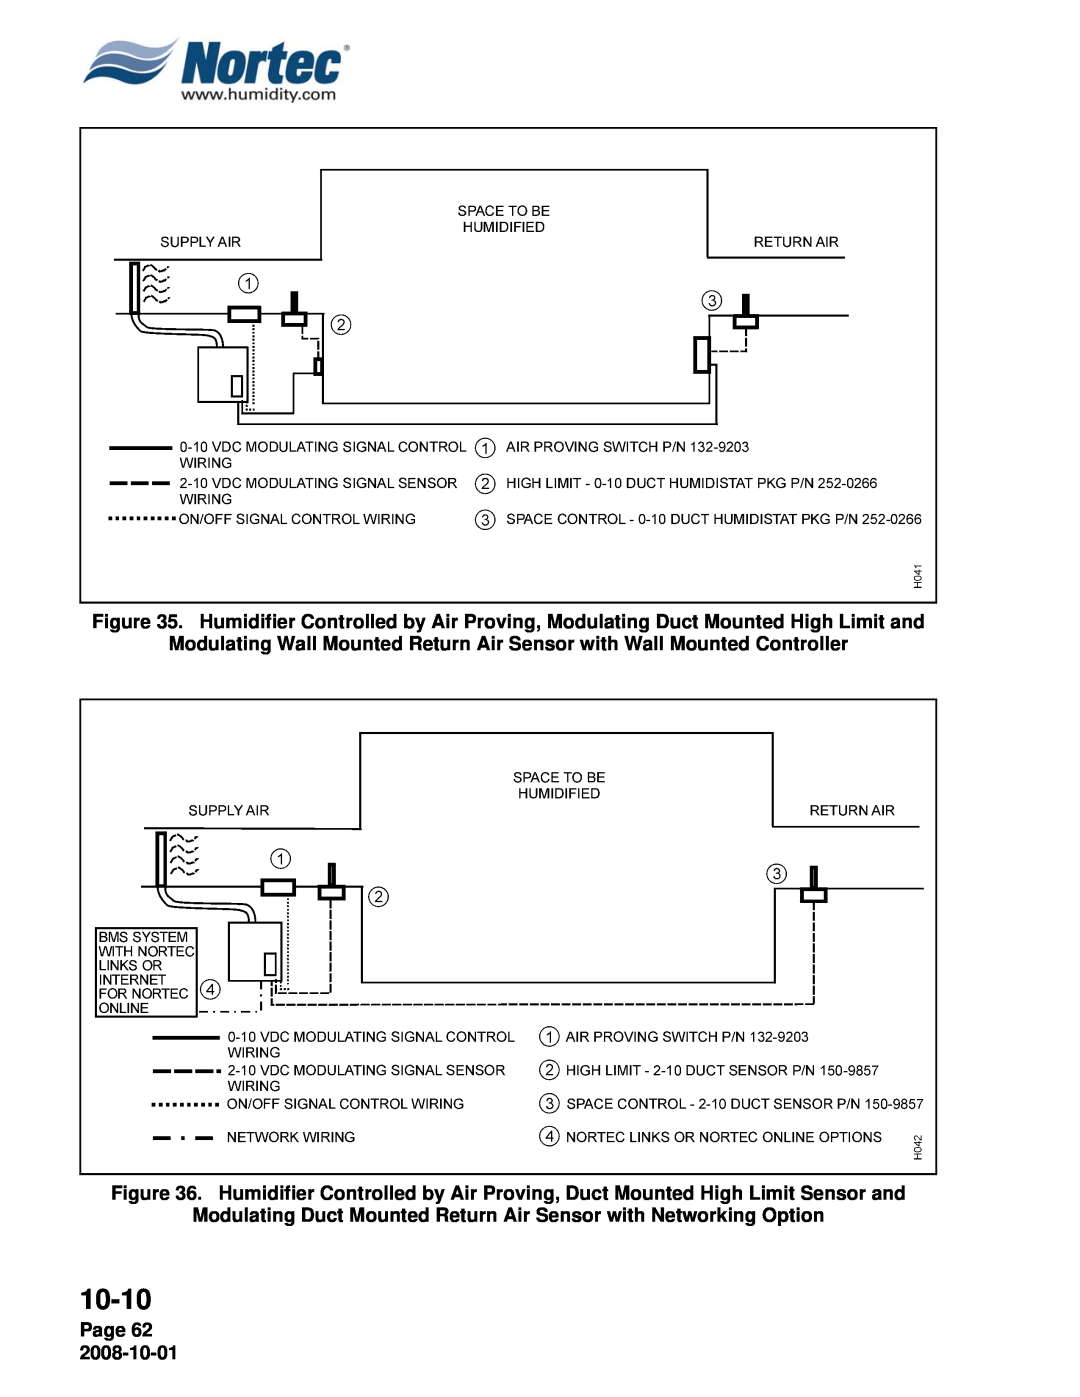 Nortec NHPC, NHTC manual 10-10, Page 62 